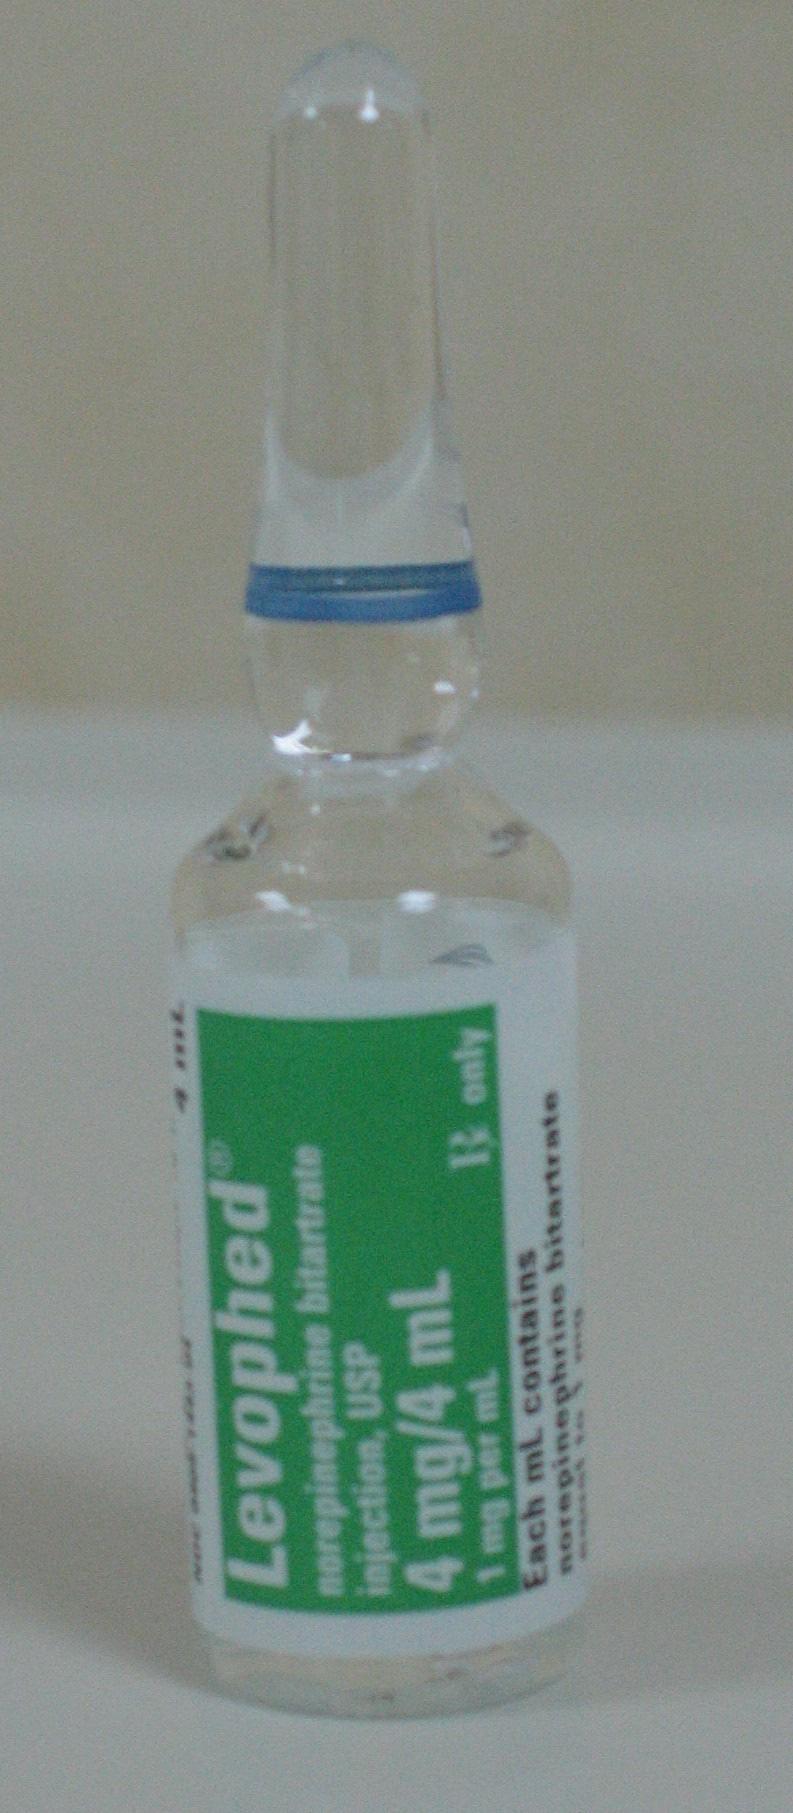 Nitroglycerin - dosage 1. IV infusion - IV bolus: 12.